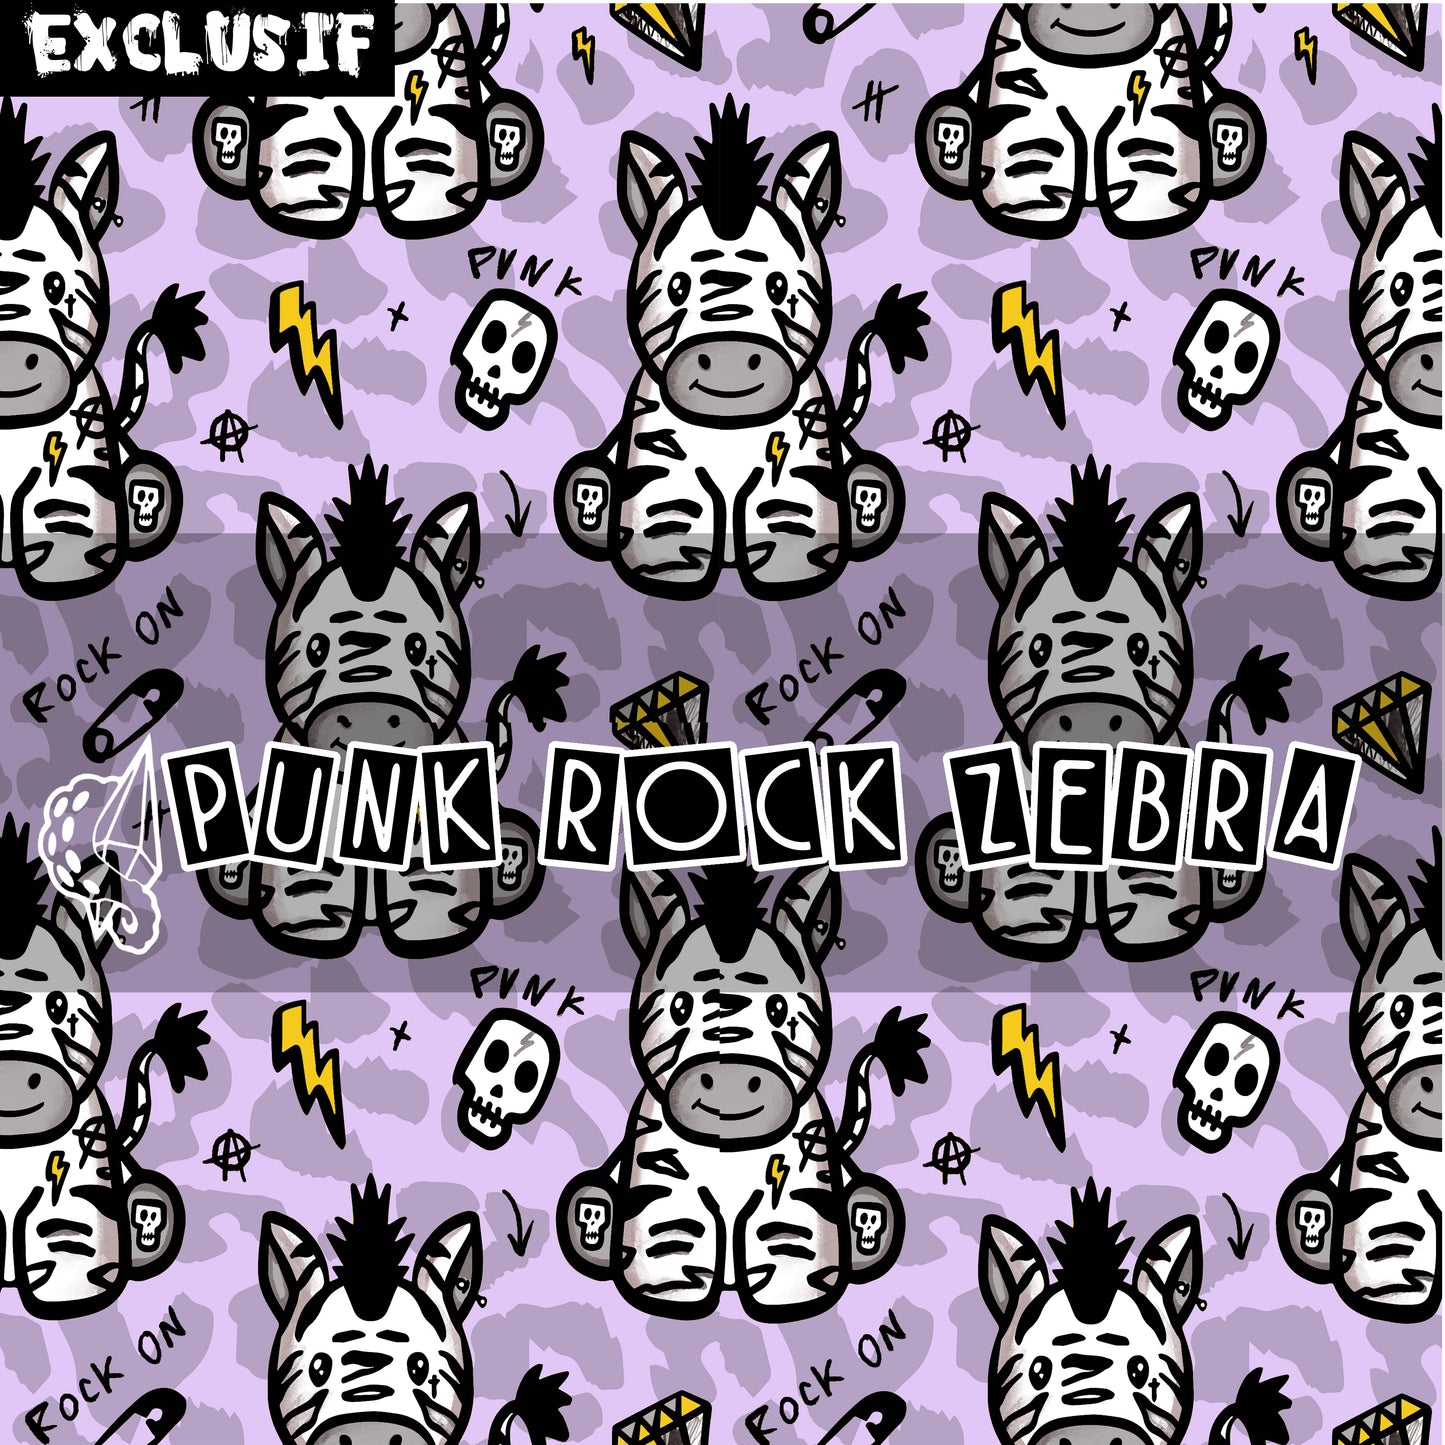 Punk Rock Zebra